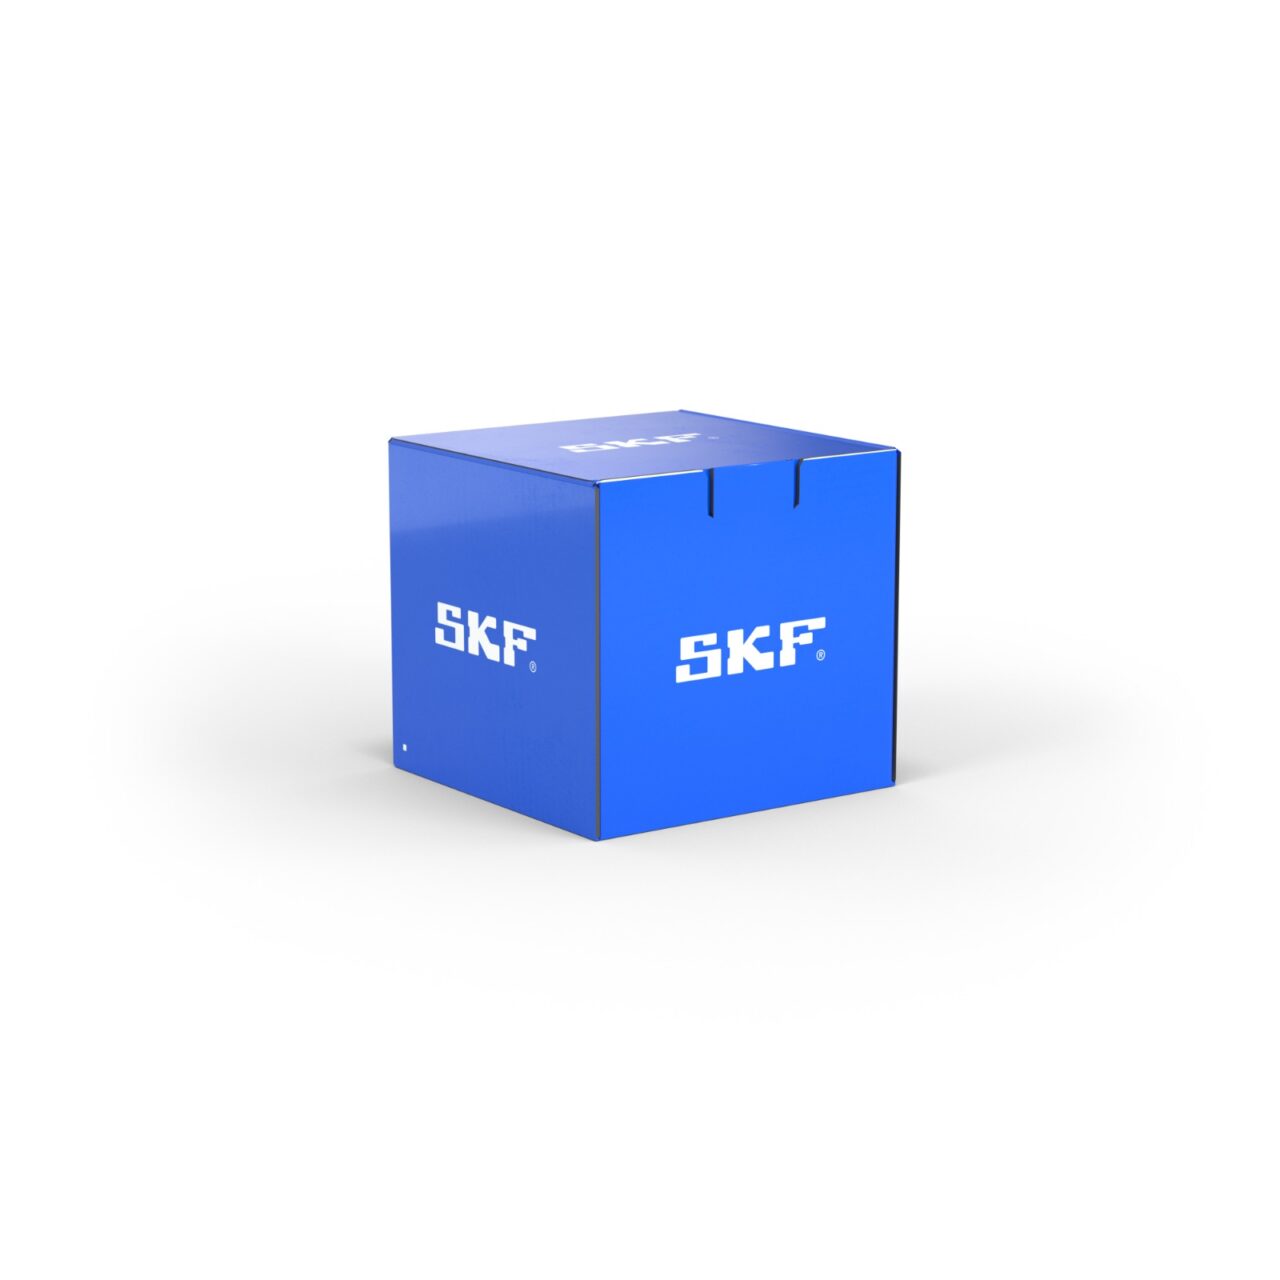 SKF lança novas embalagens no Brasil